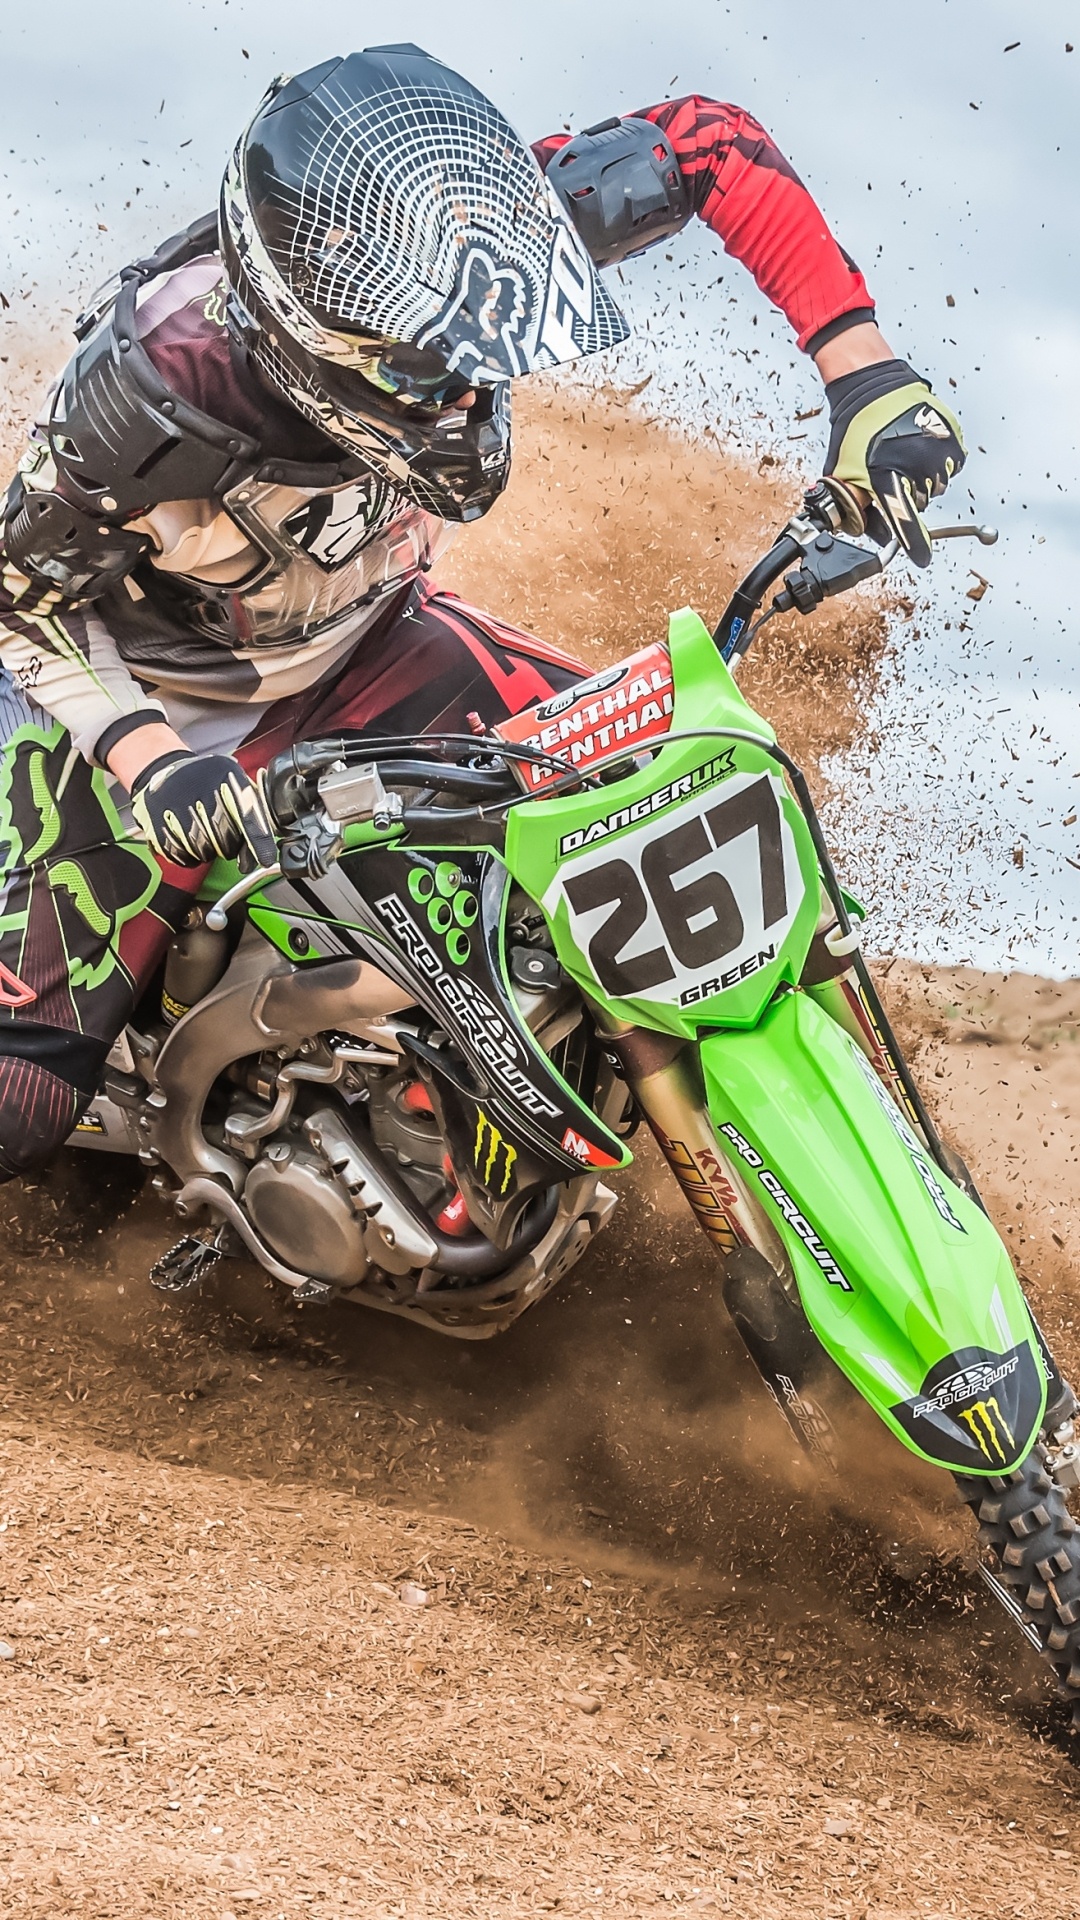 Motocross: Pro Circut, Dirt, Cornering, Motorsports. 1080x1920 Full HD Wallpaper.